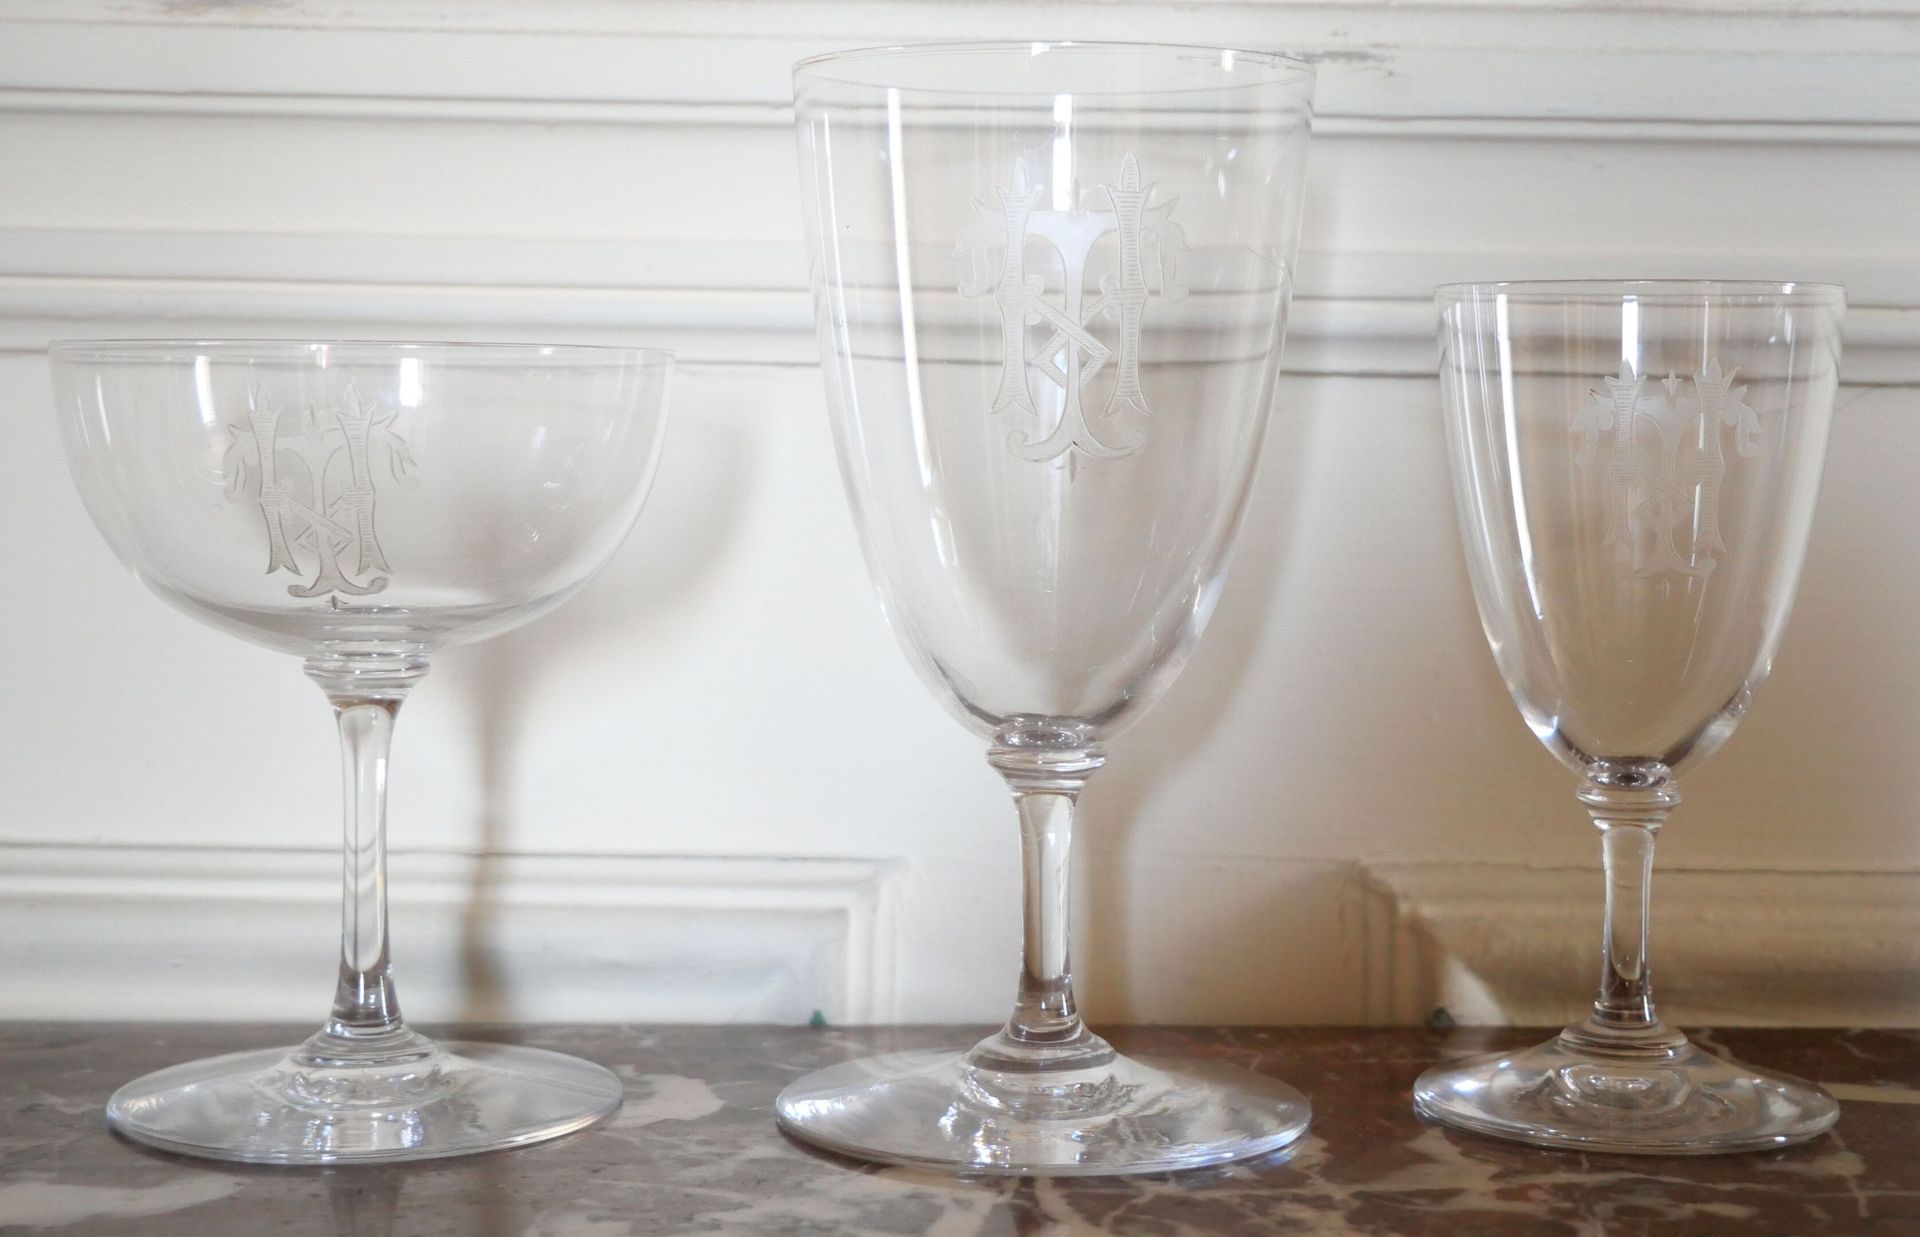 Null 错落有致的水晶杯服务的一部分，其中一些杯子上刻有字母装饰。

- 4个水杯。高度：15厘米

- 6个酒杯。高度：12厘米

- 4个香槟酒杯。高度：&hellip;